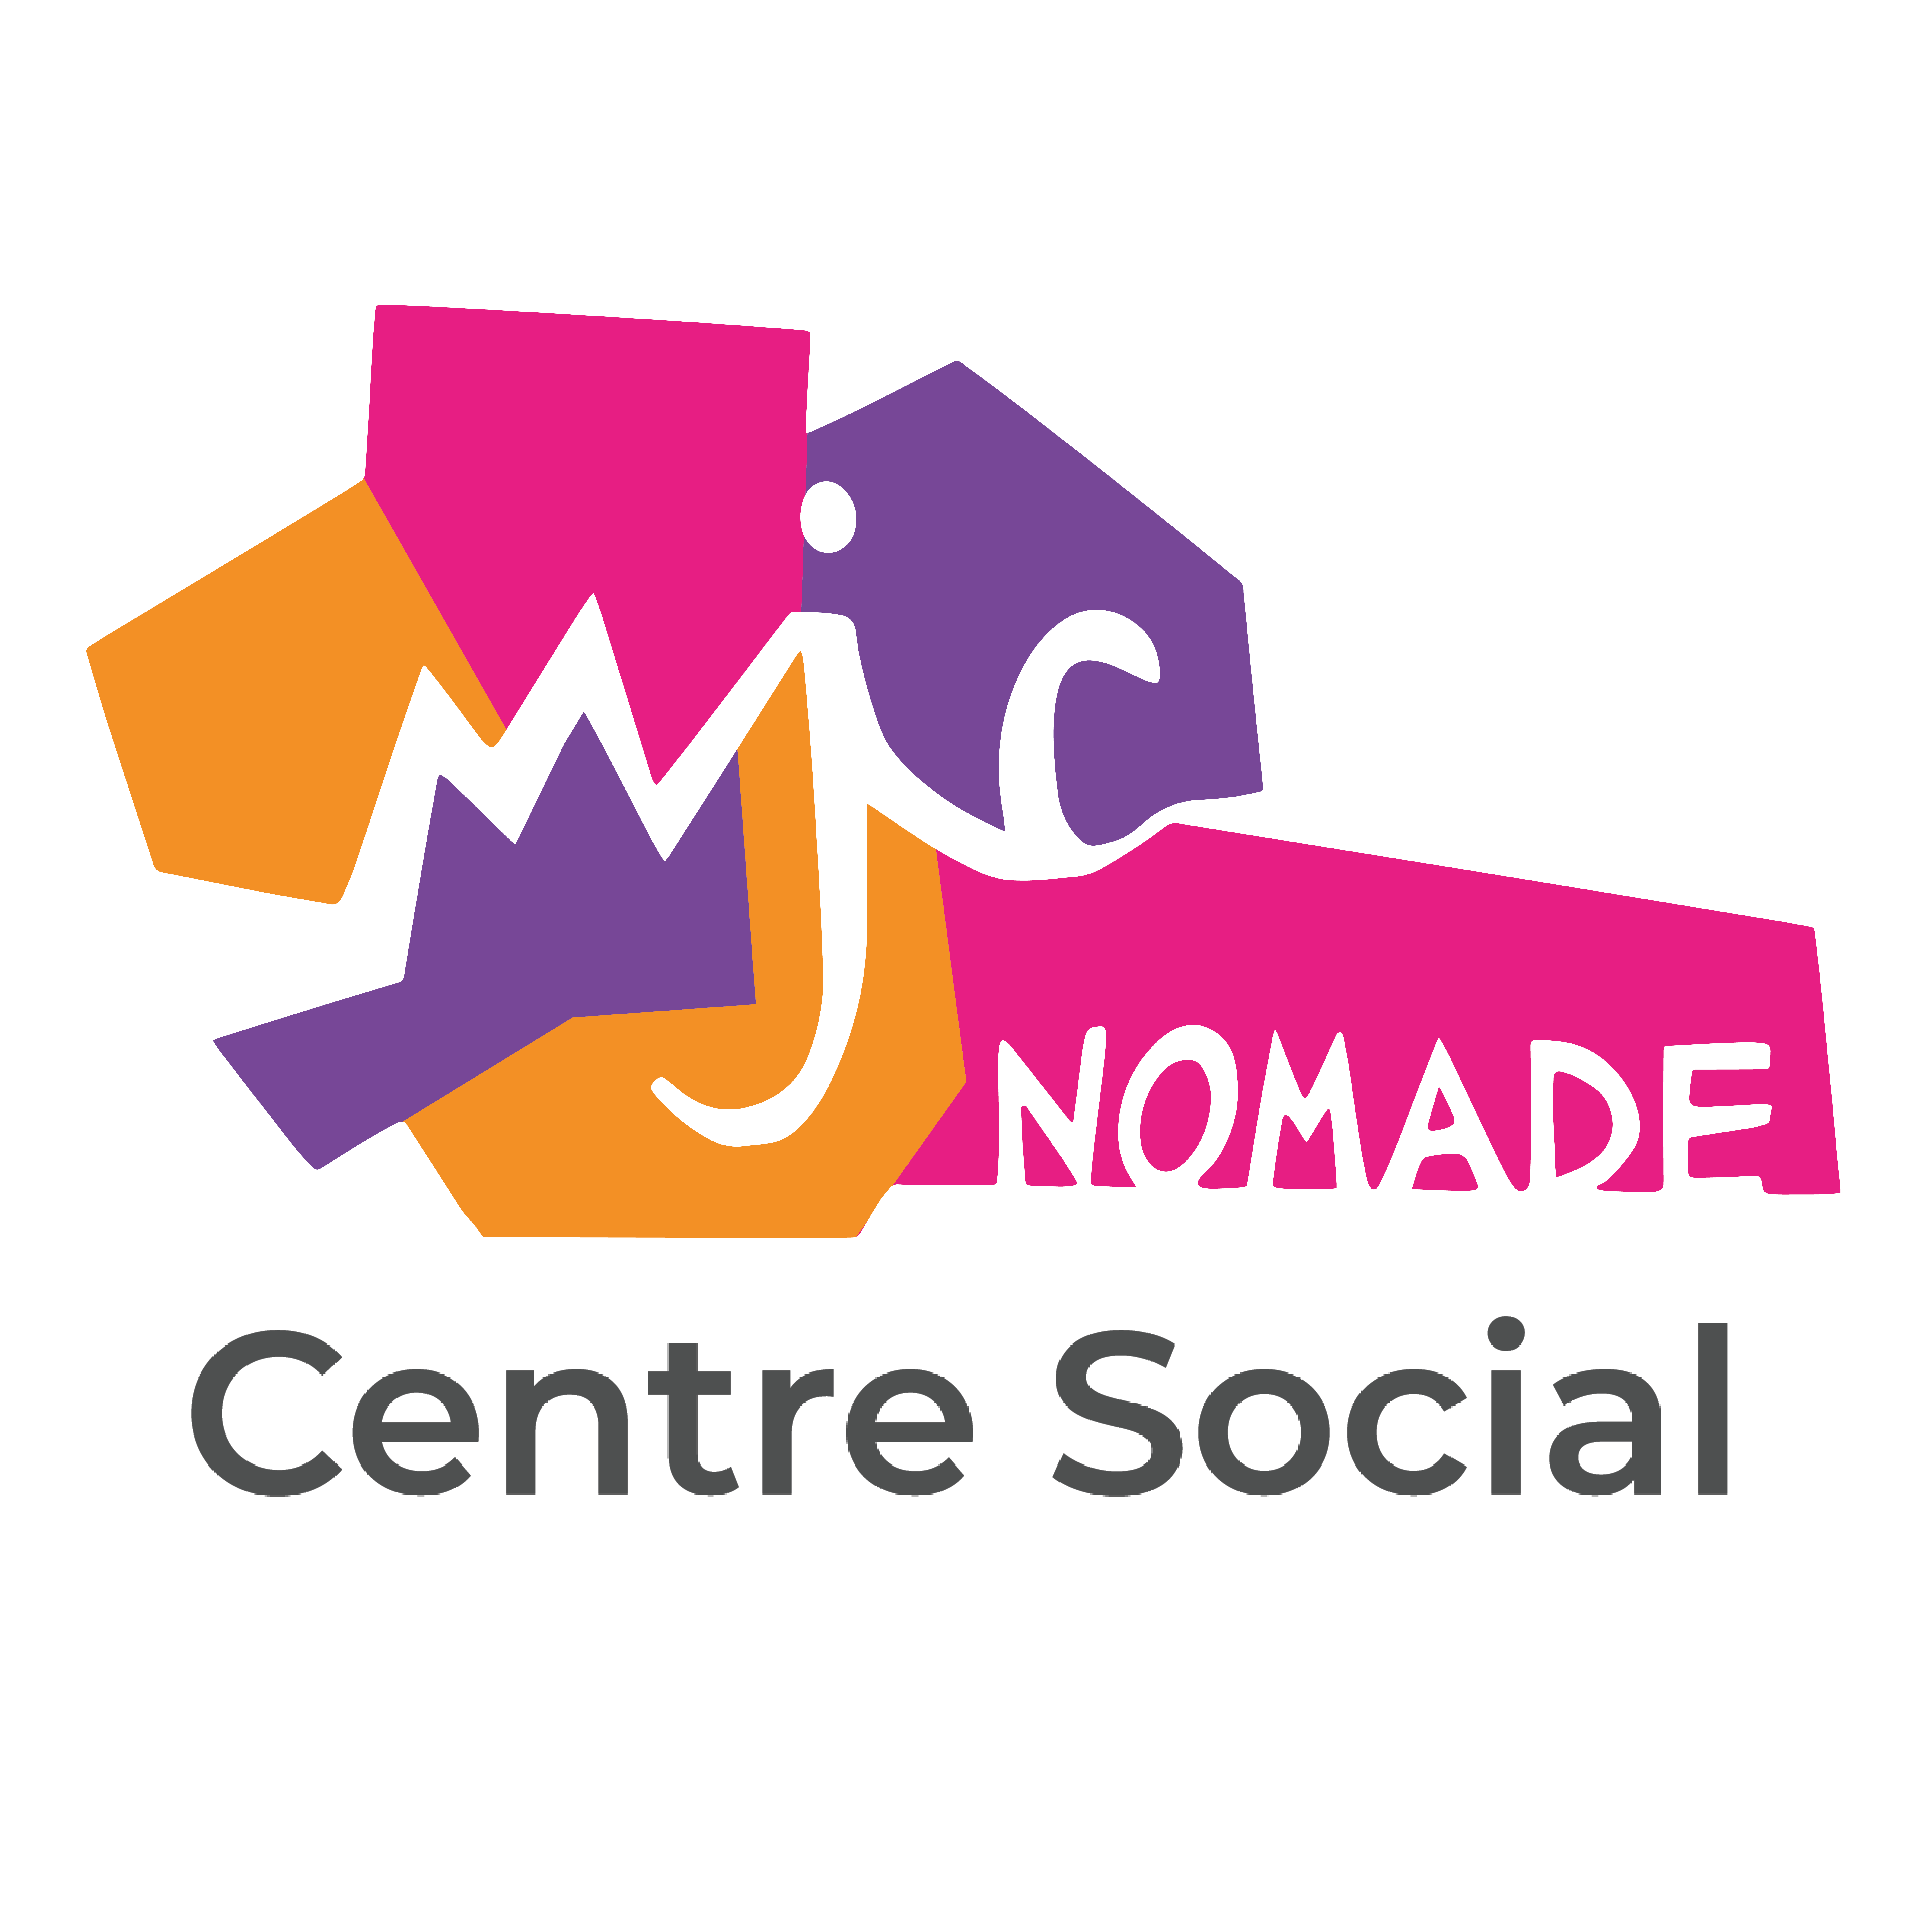 Logo MJC CS NOMADE